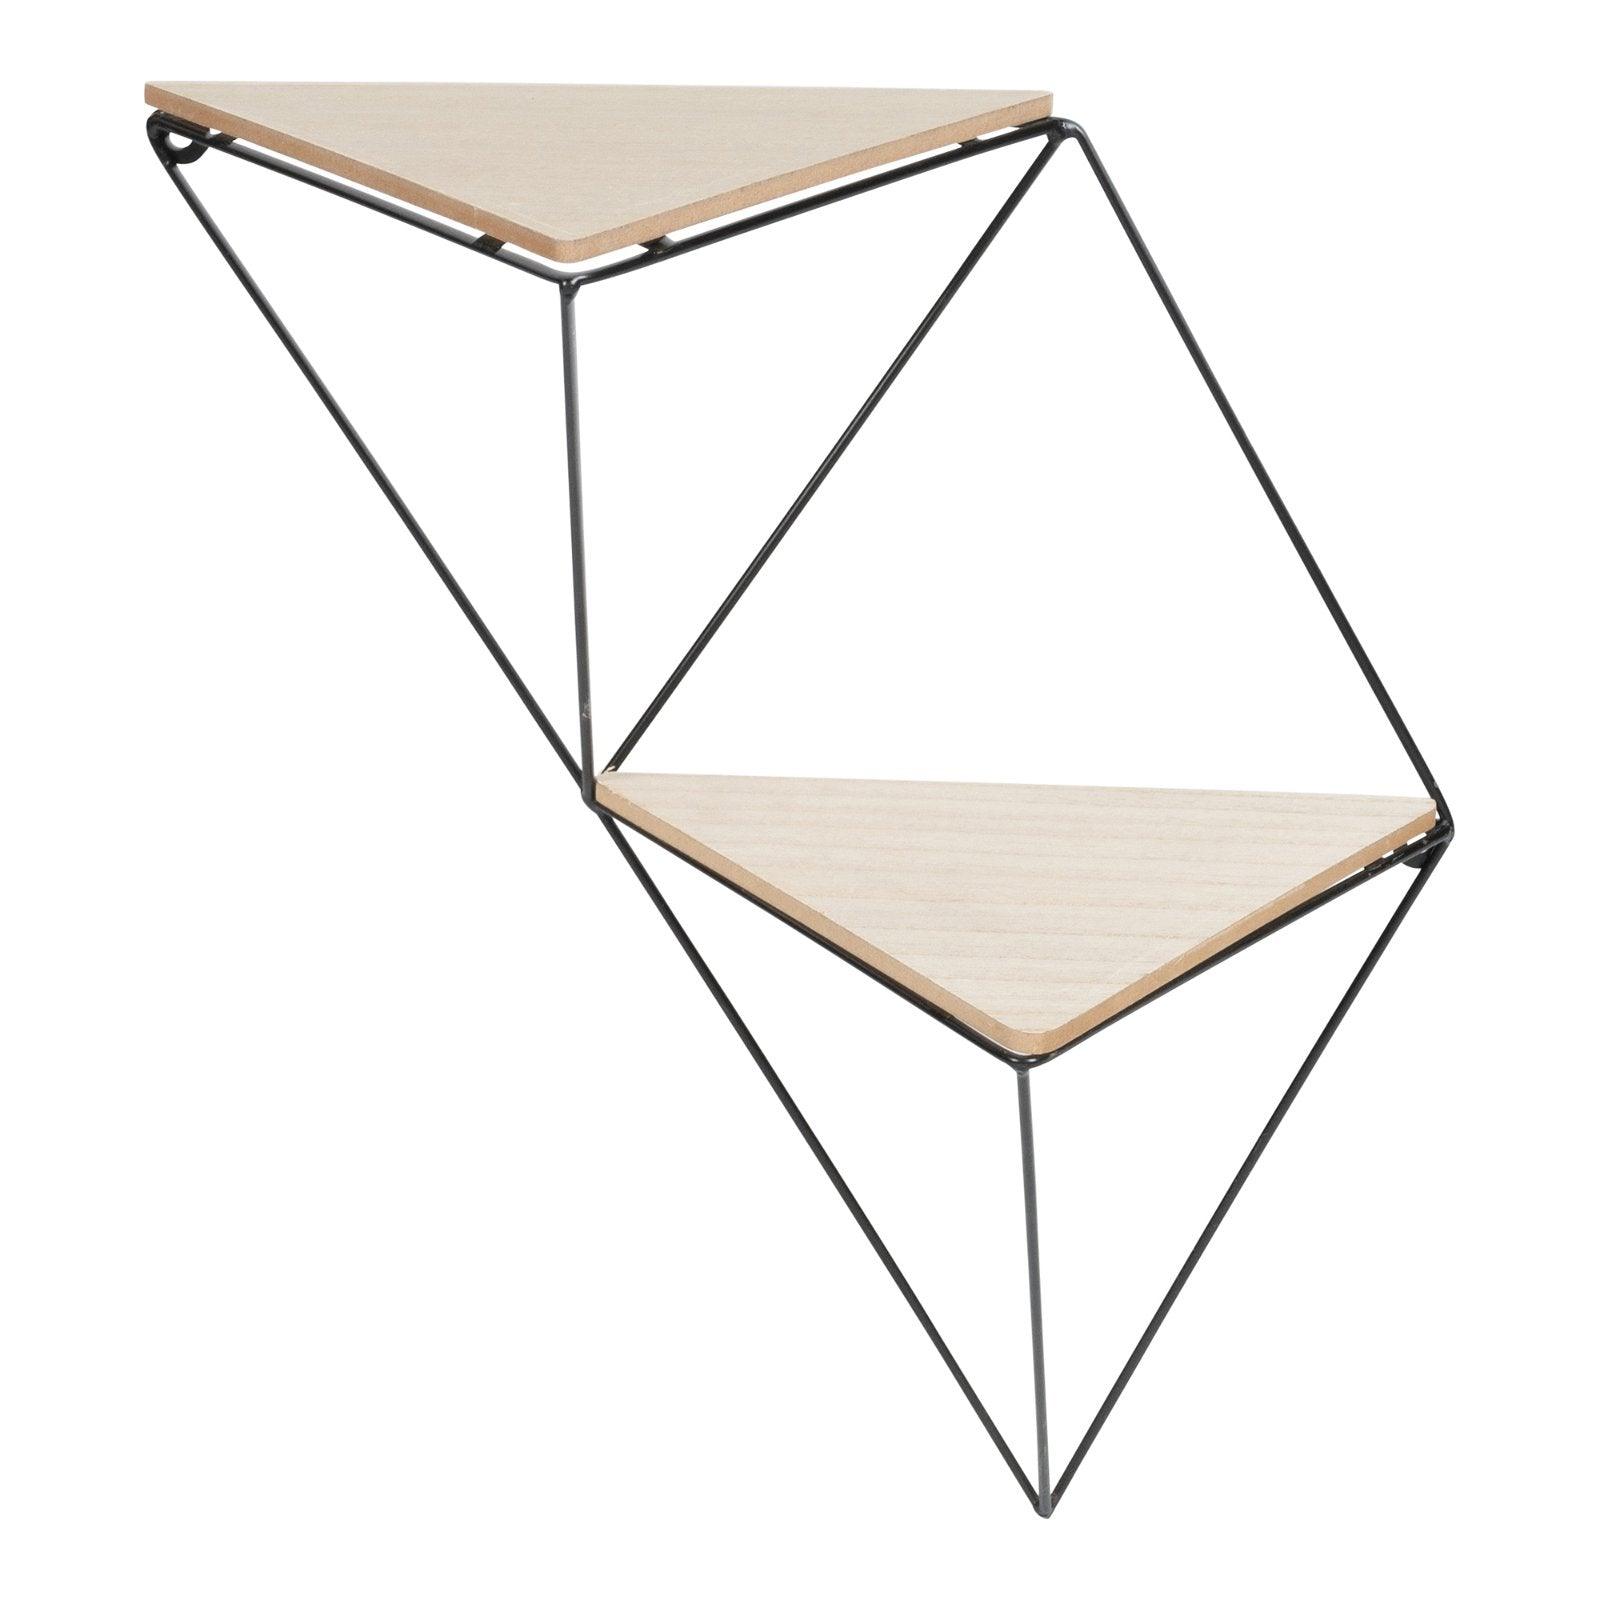 View Double Triangular Shelf 47cm information